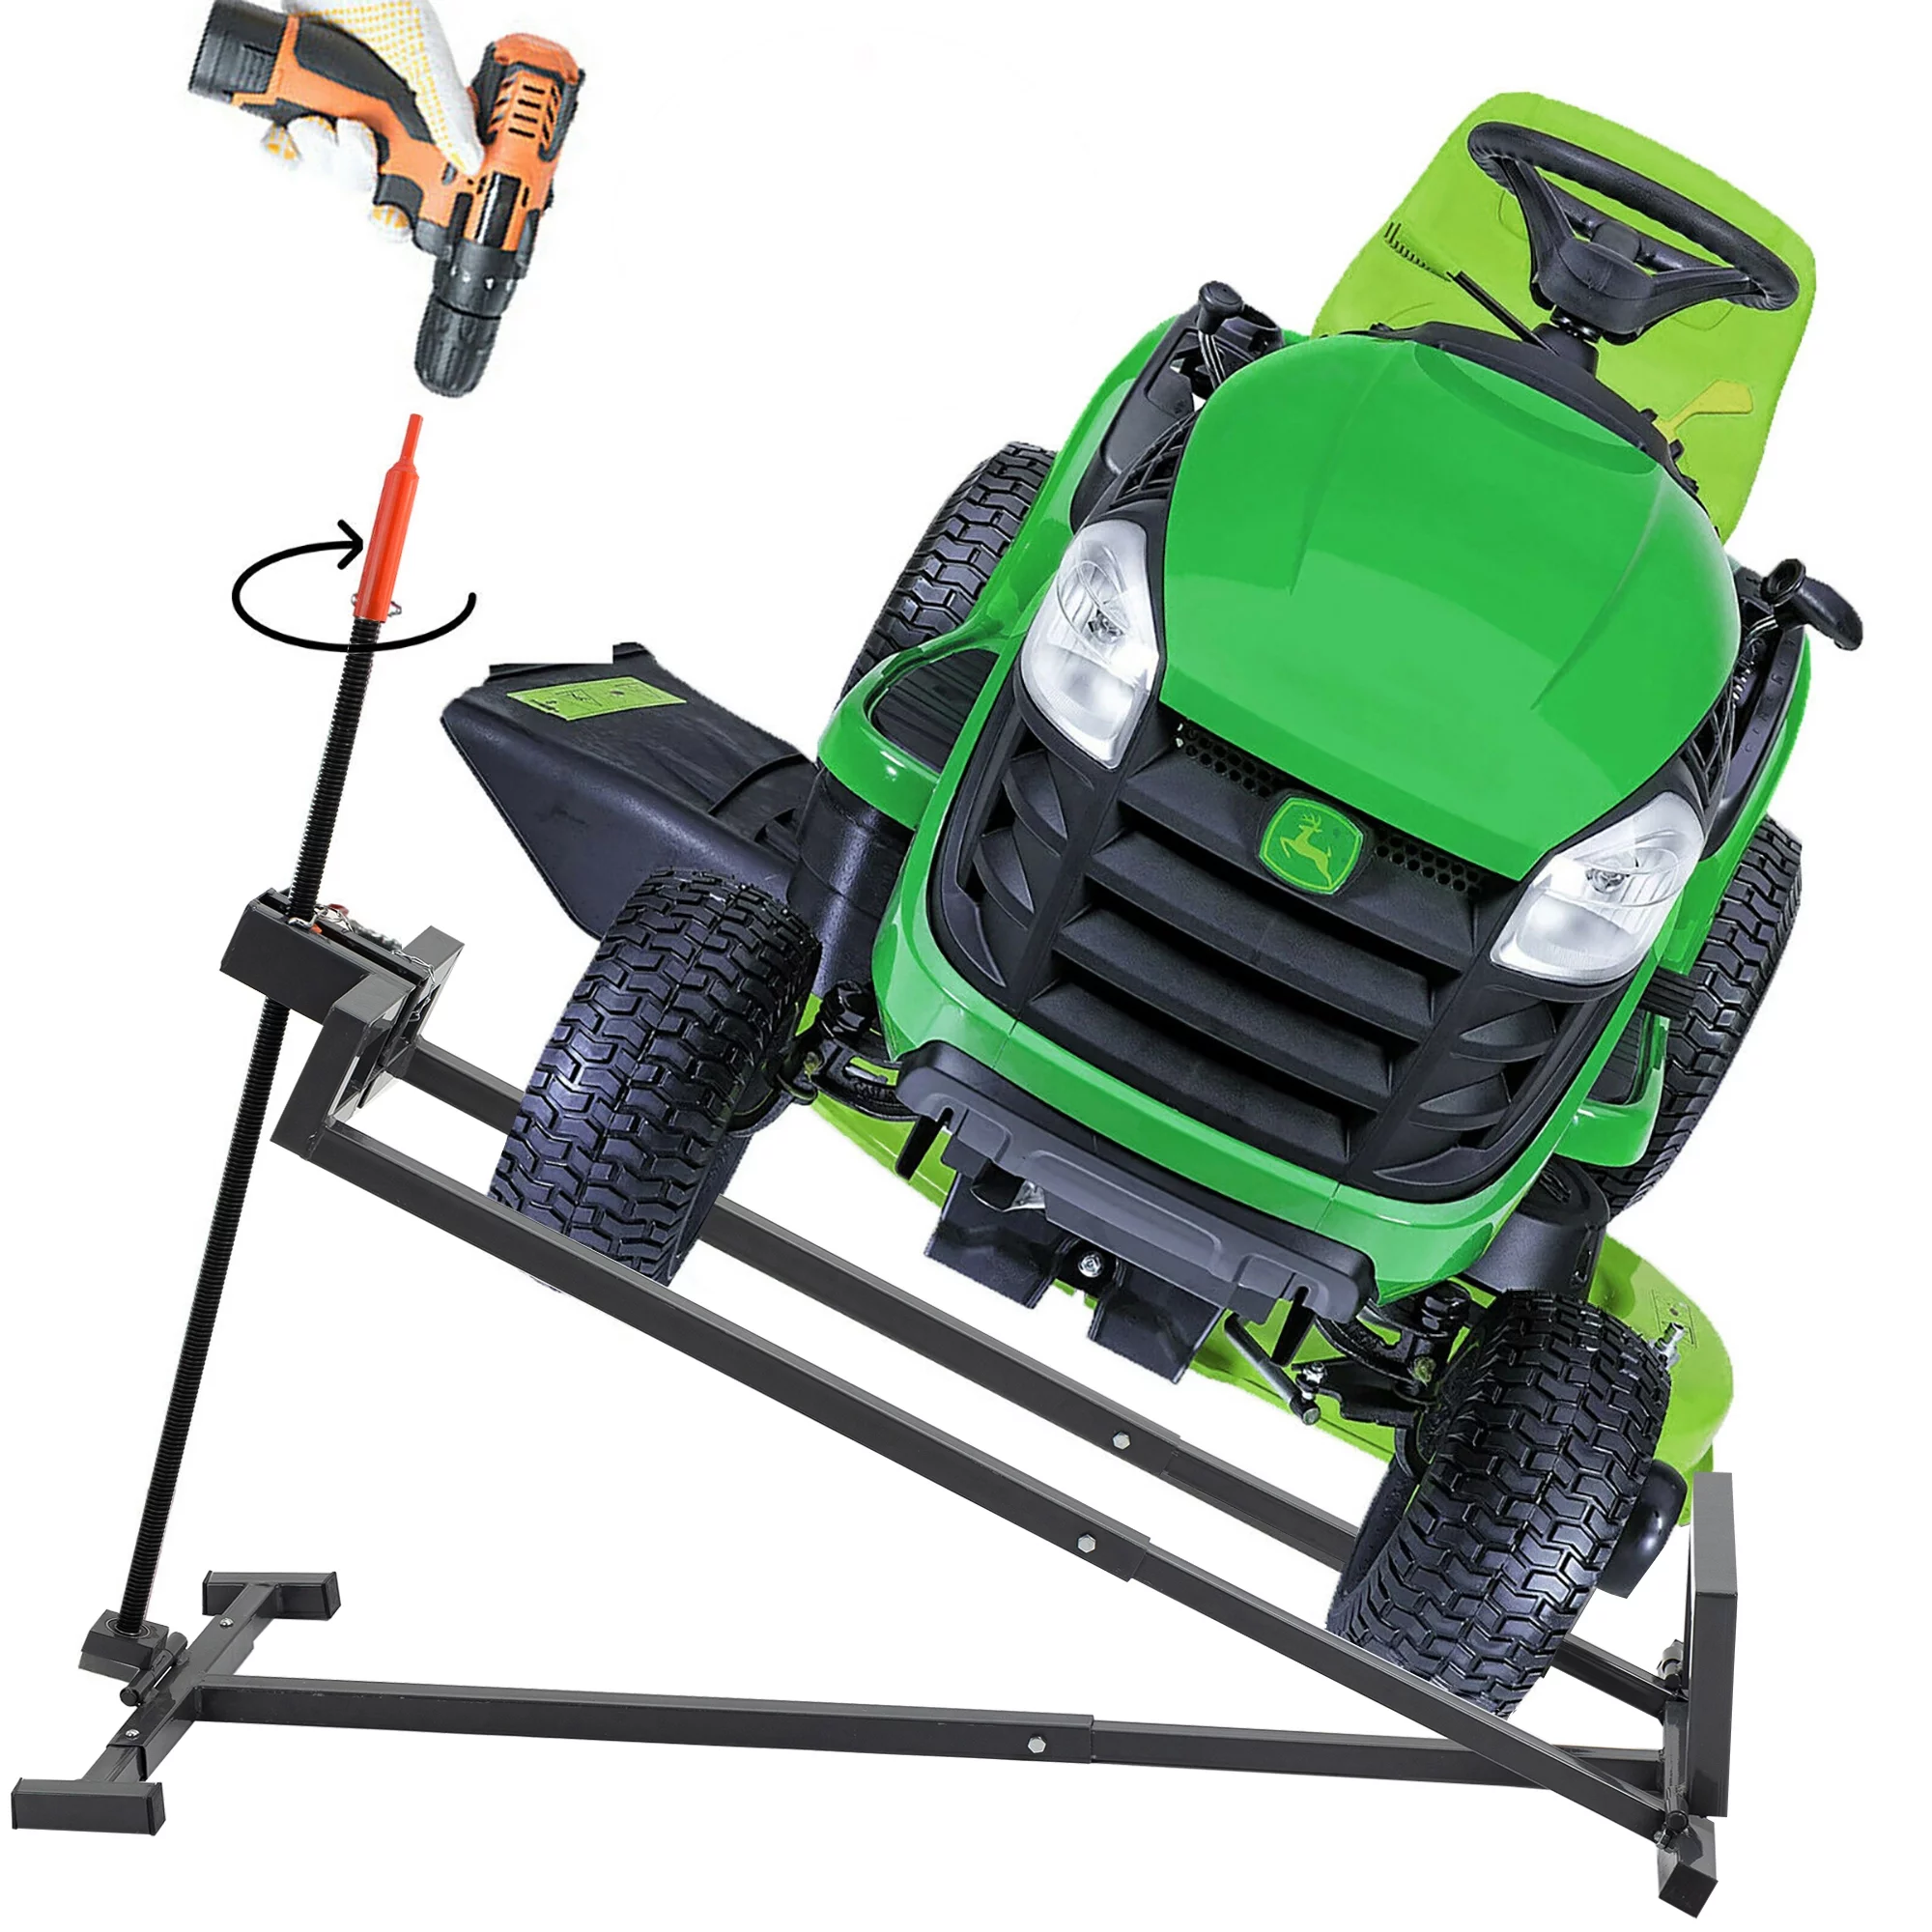 LZBEITEM Heavy Lawn Mower Lift Jack Rod - 882 lbs Capacity for Tractors and Zero Turn Lawn Mowers